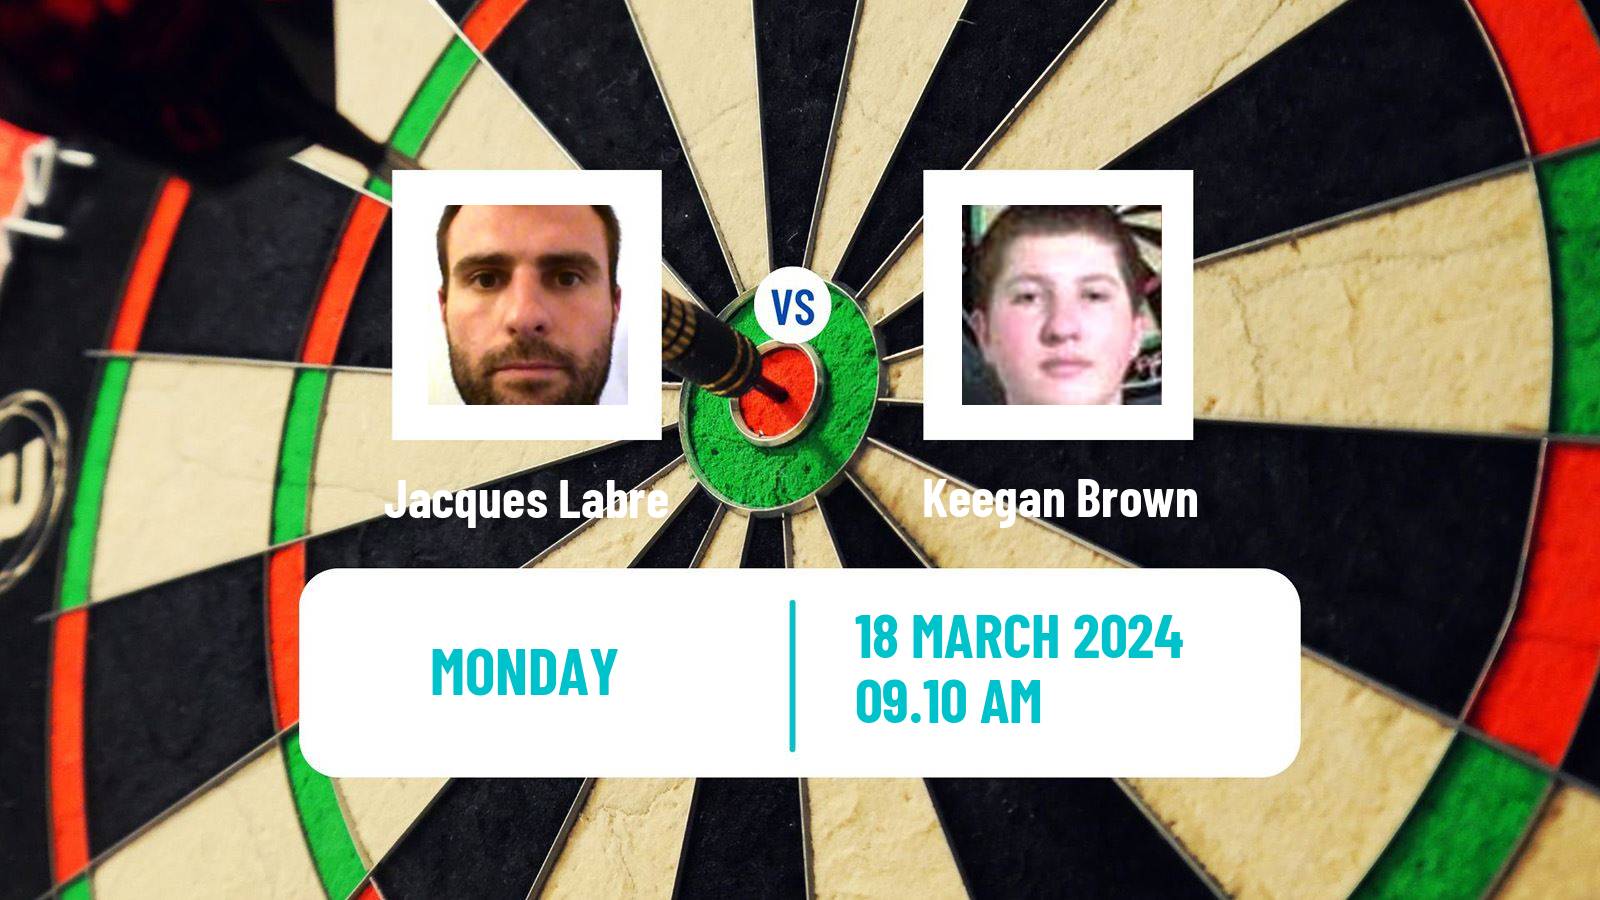 Darts Players Championship 5 Jacques Labre - Keegan Brown